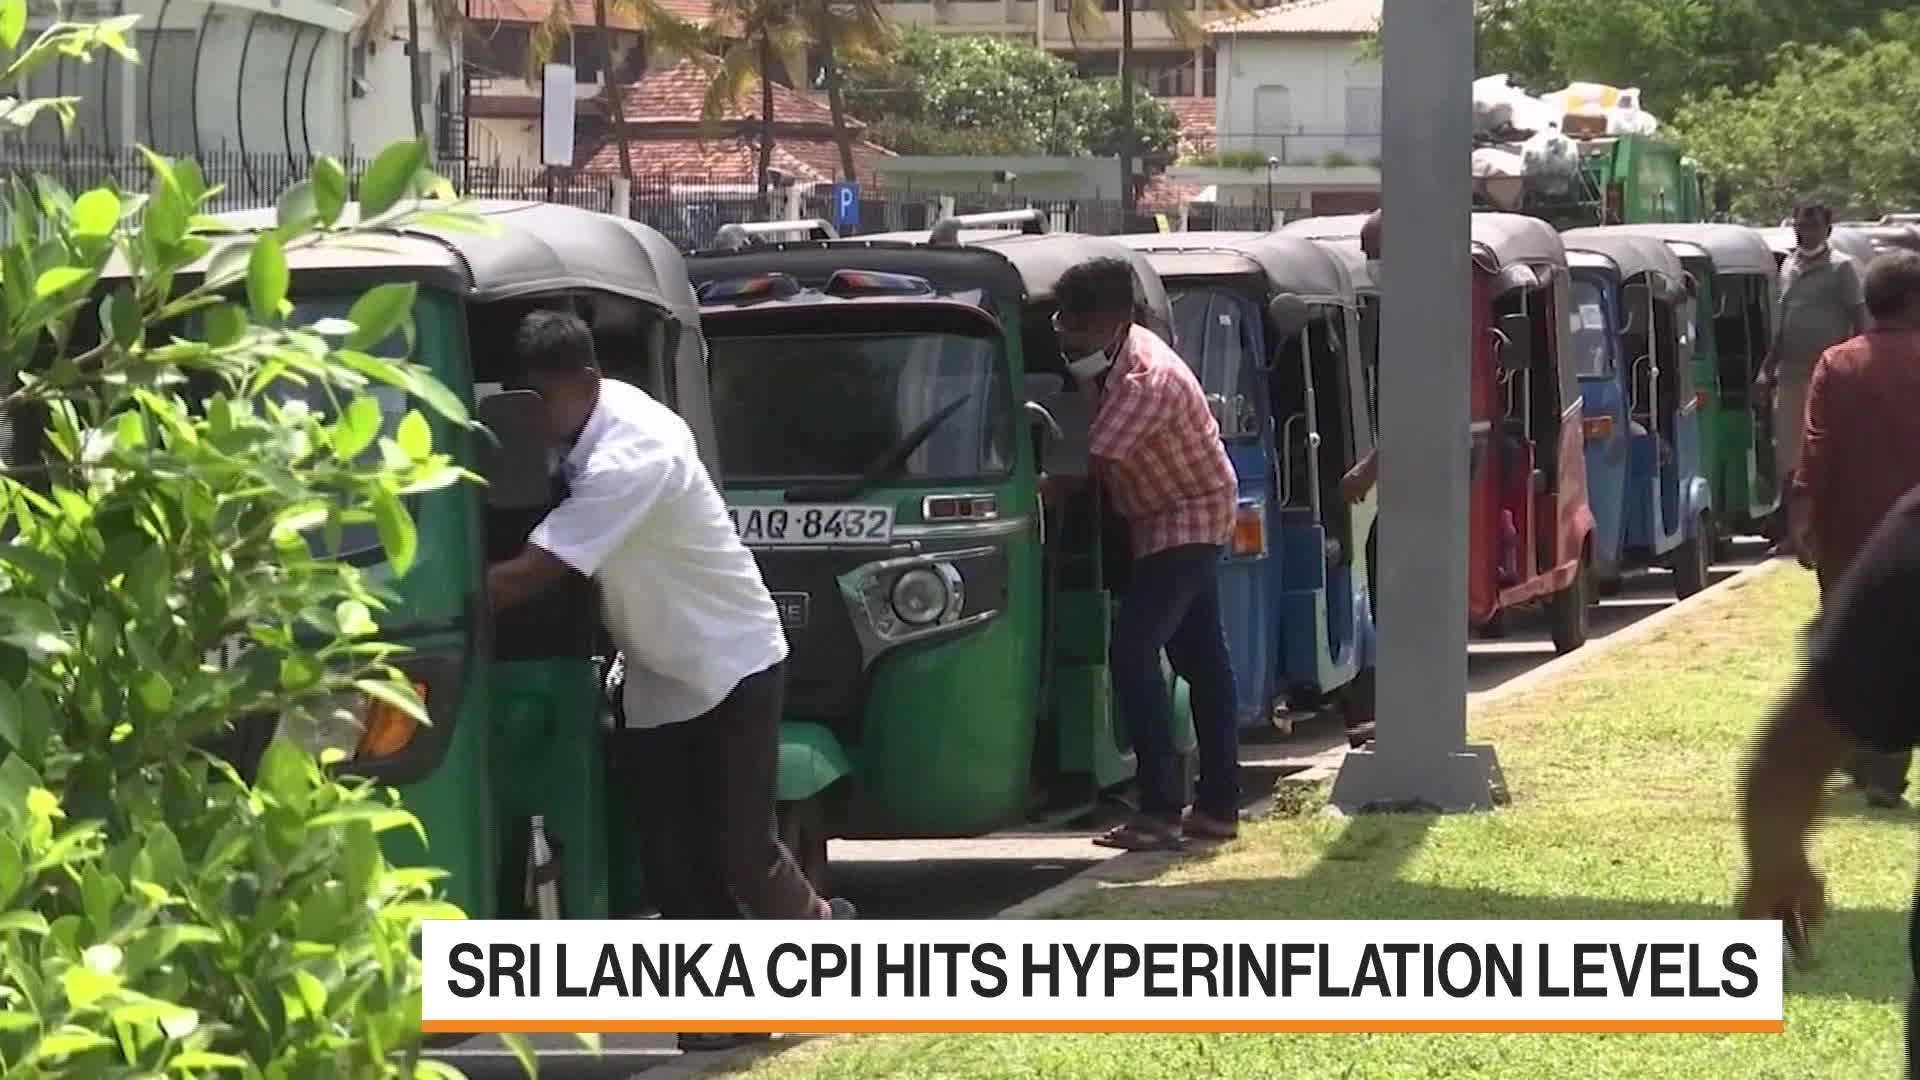 Bankrupt Sri Lanka's inflation hits 54.6%. The cause: Corruption